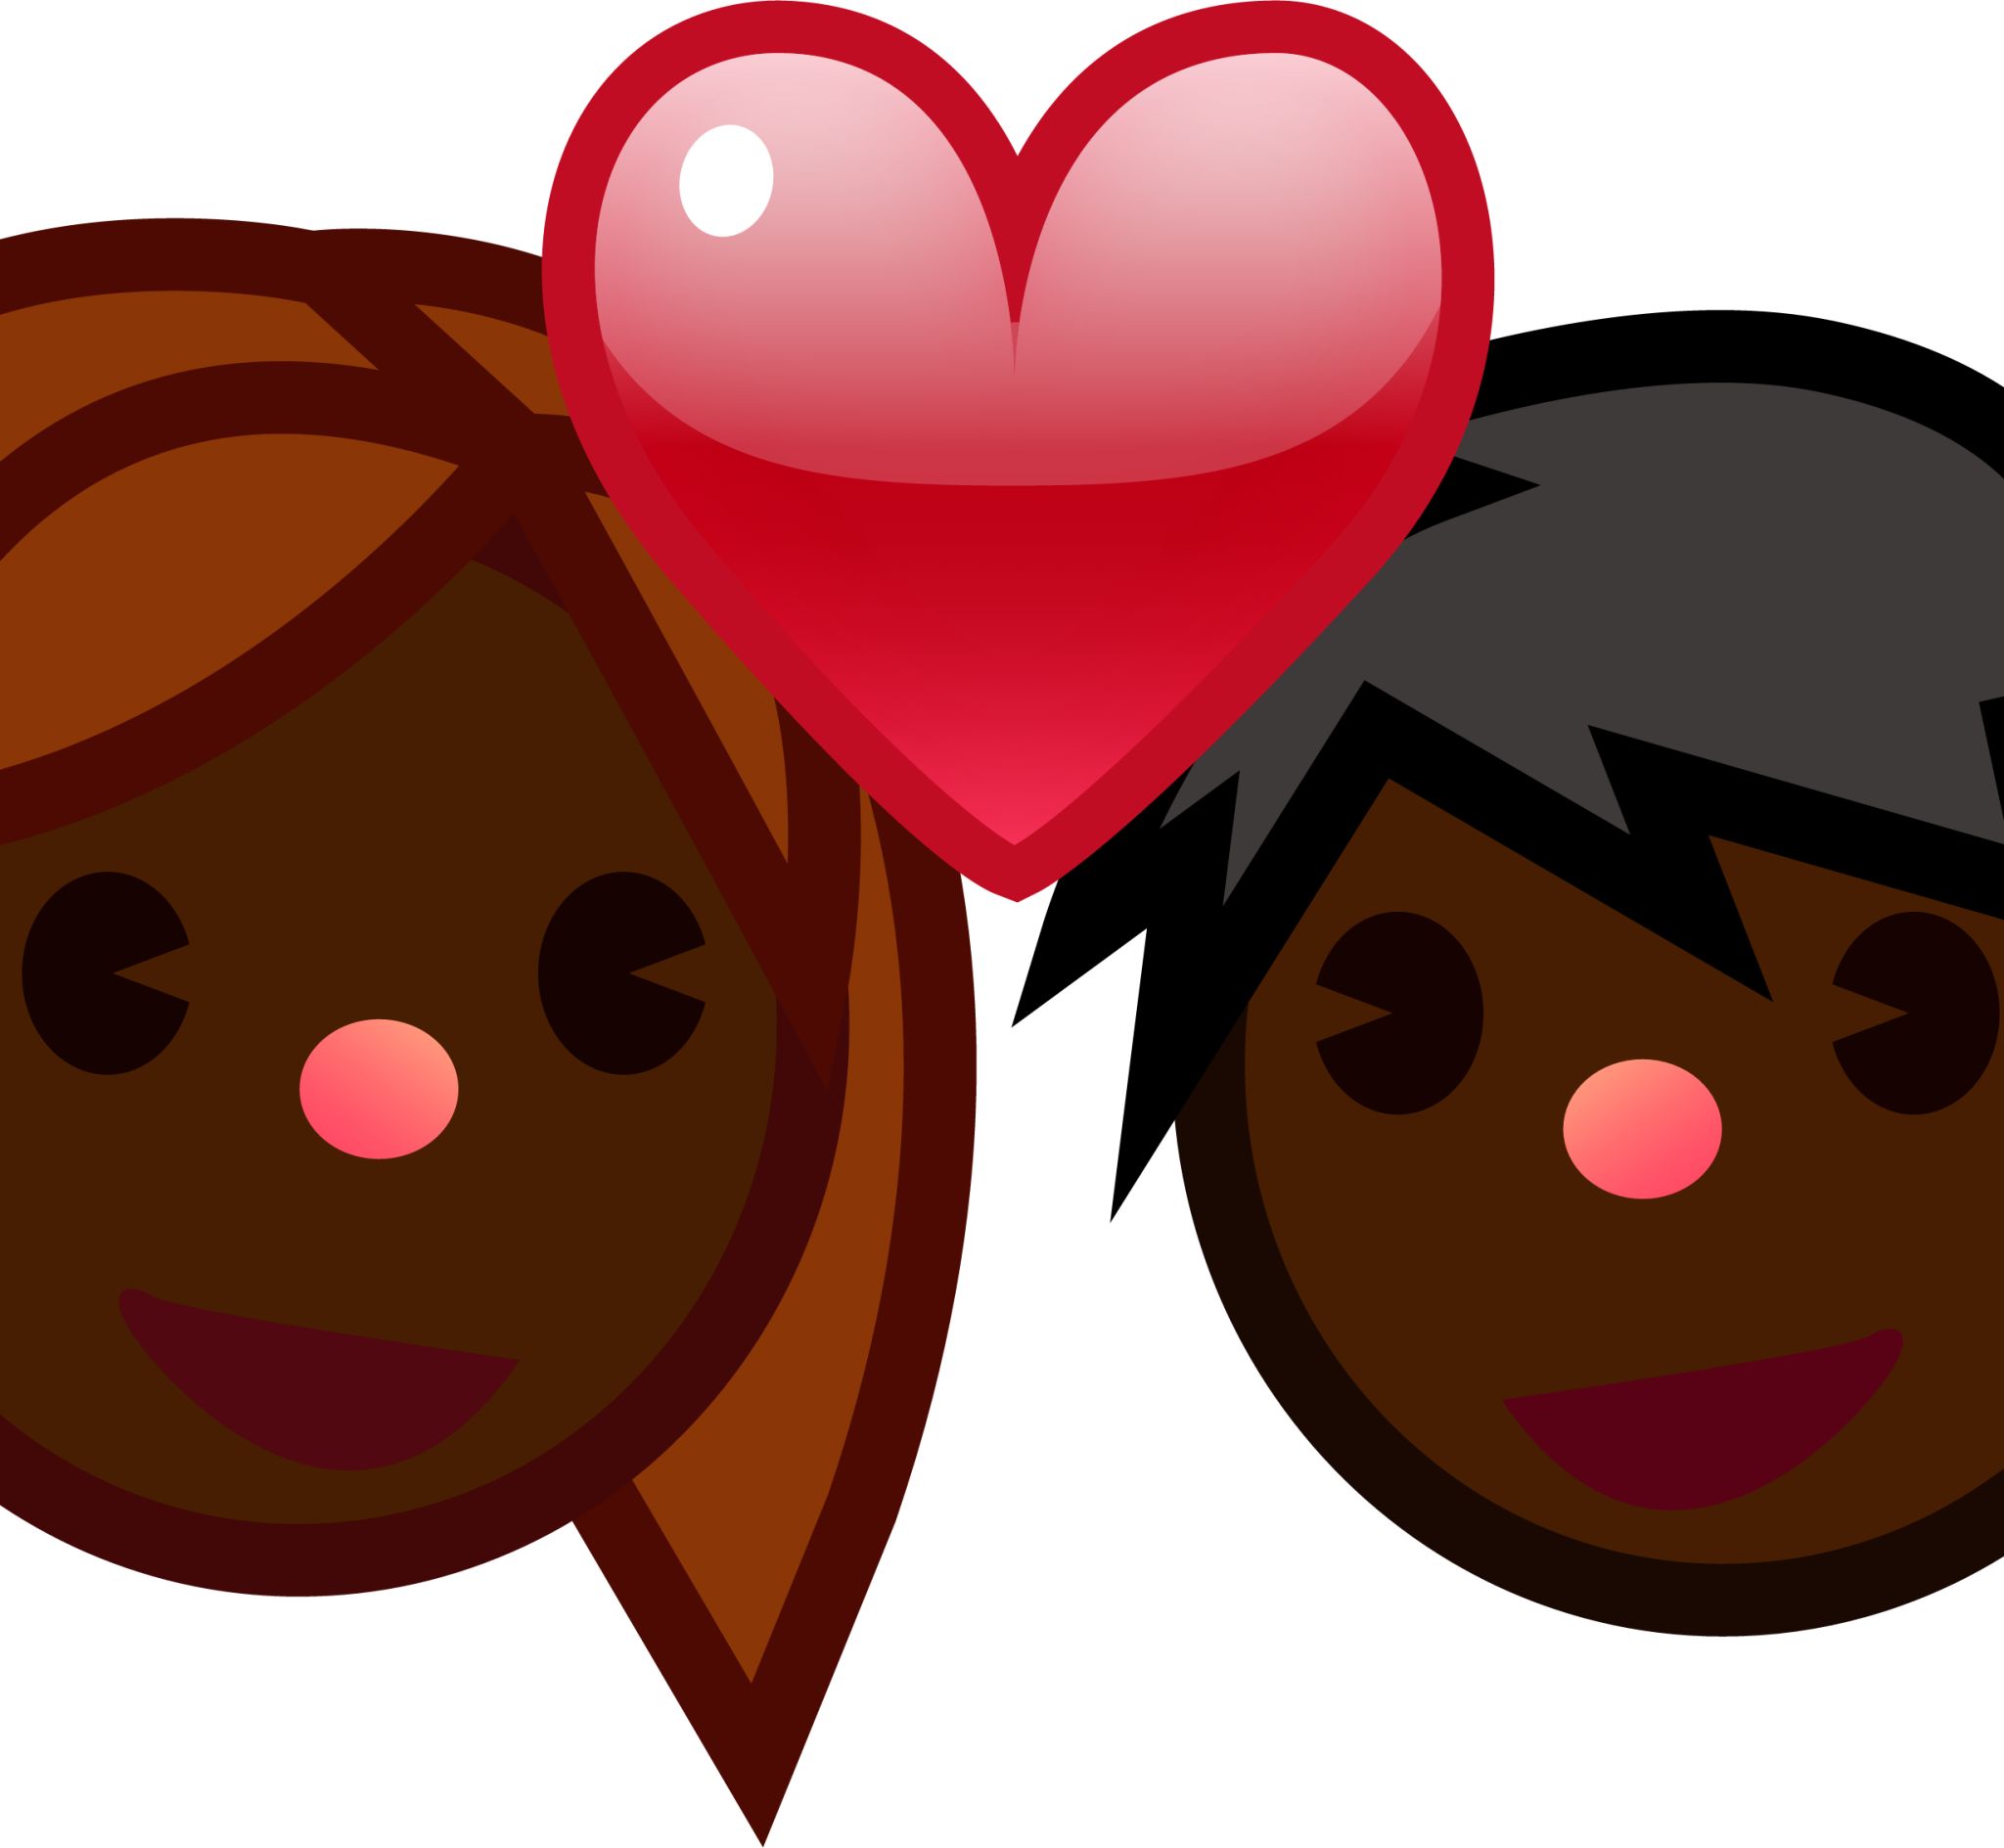 couple with heart (black) emoji